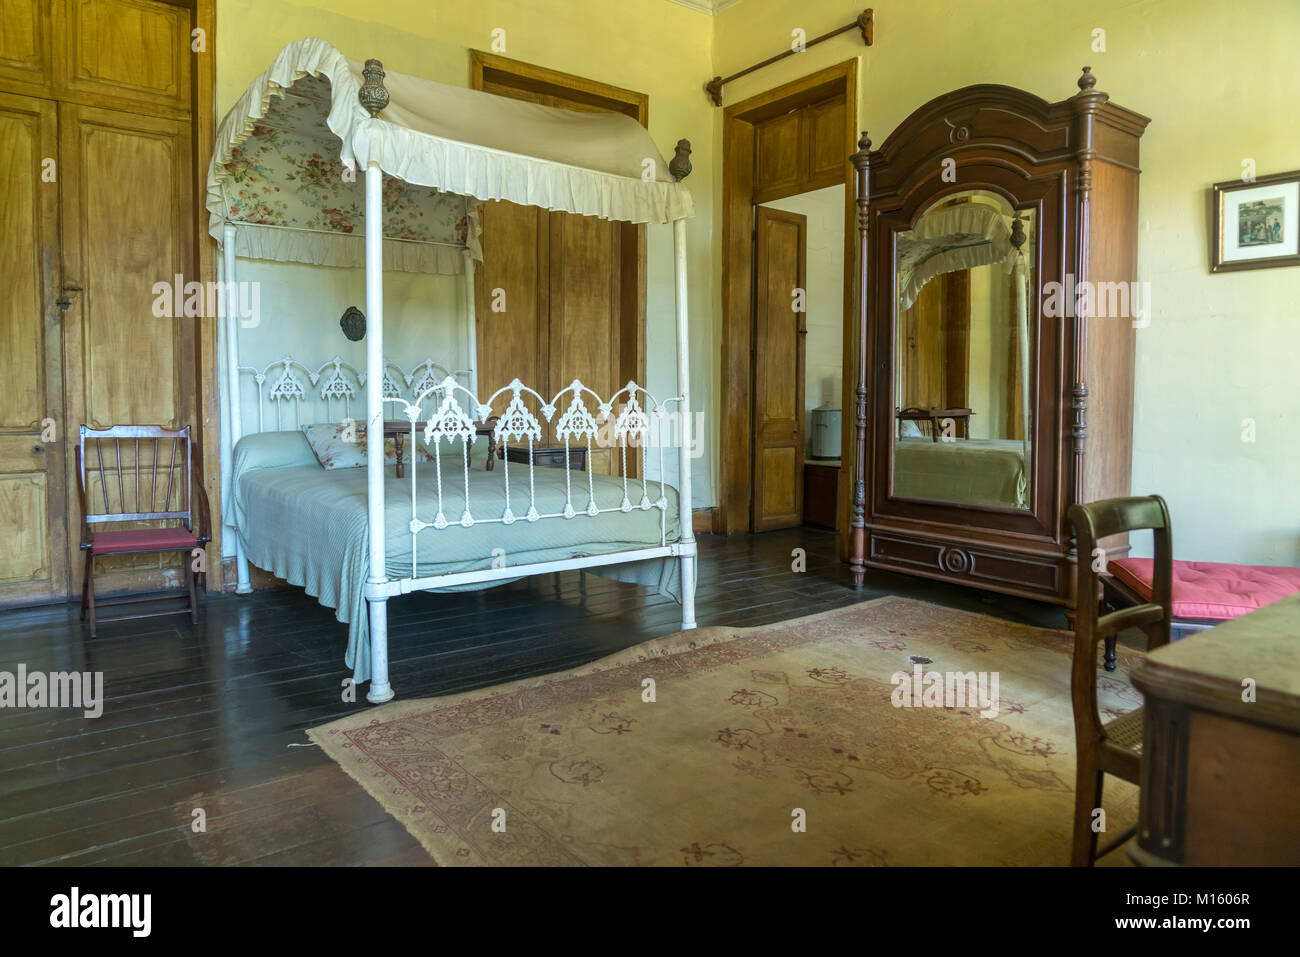 Bedrooms of the historical colonial villa Eureka House,Maison Eureka,Moka,Mauritius Stock Photo